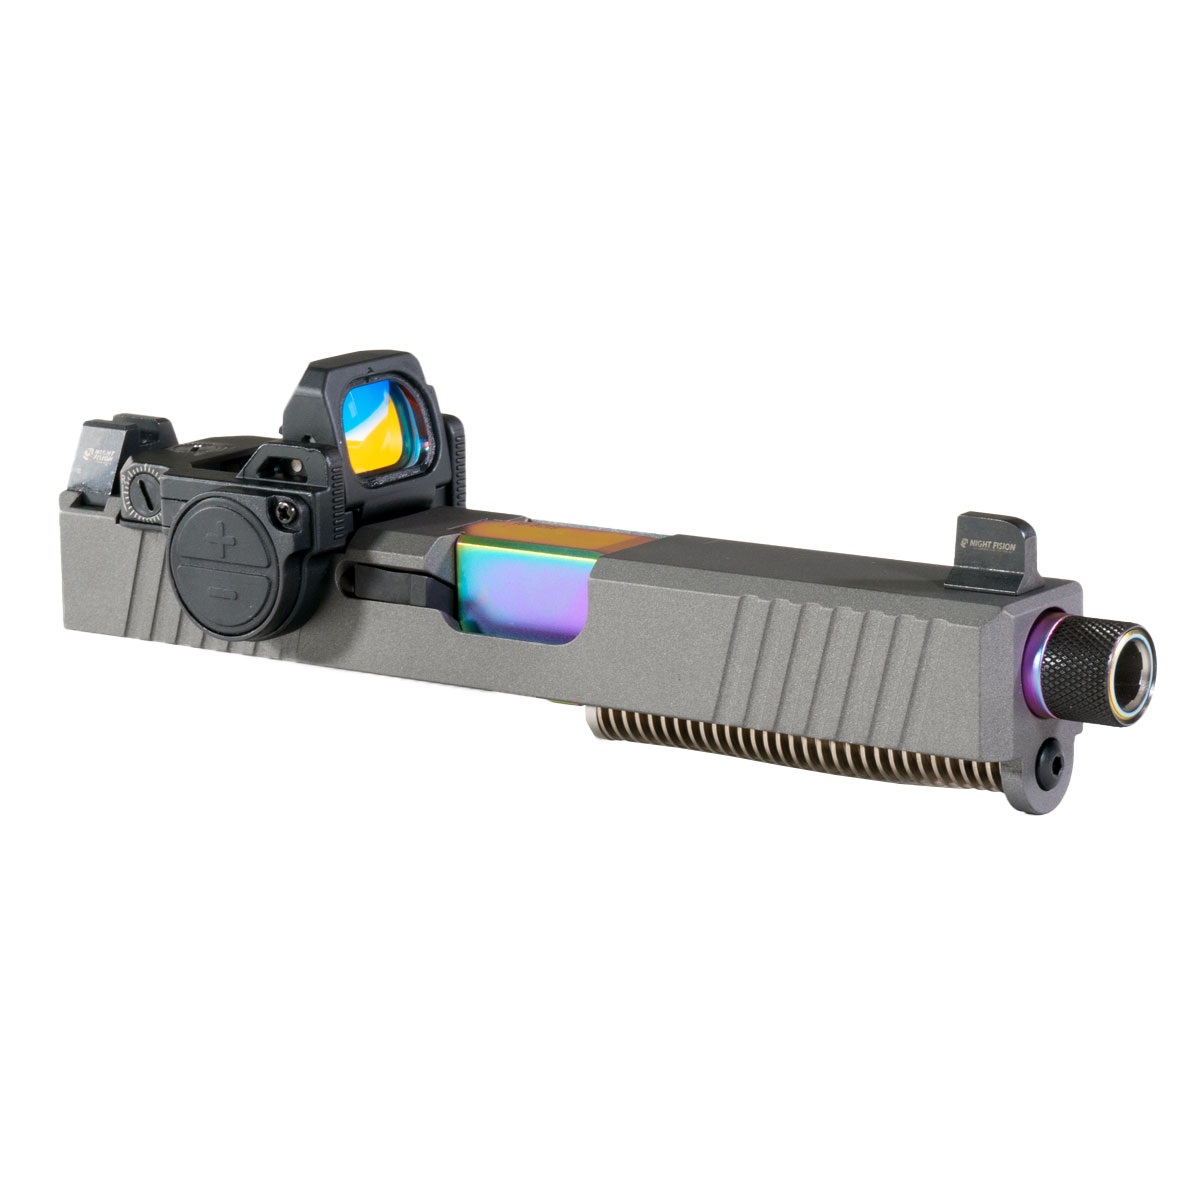 DD 'Spectrum Scales' 9mm Complete Slide Kit - Glock 19 Gen 1-3 Compatible